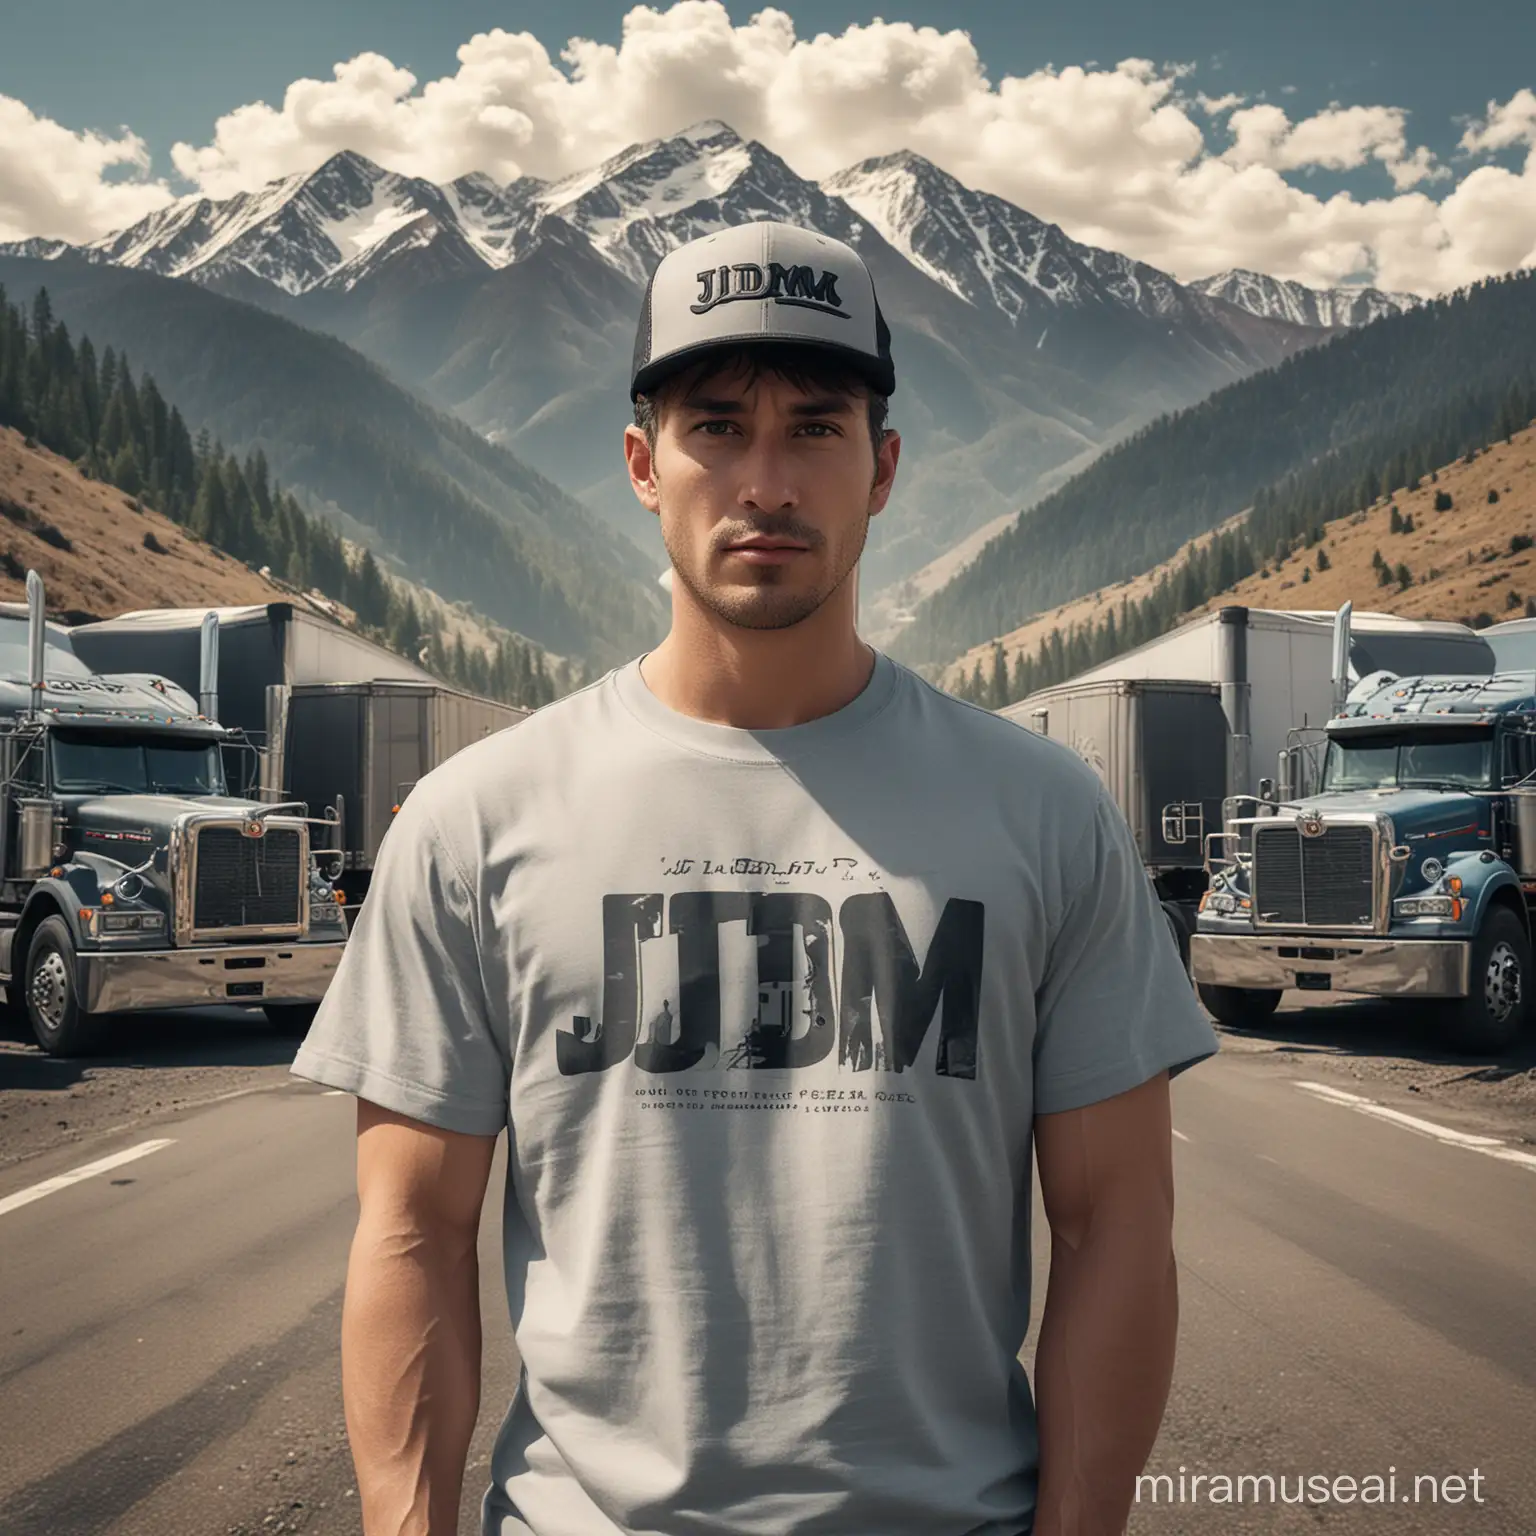 Cтоит драйвер в центре в форме с кепкой на рубашке и на кепке надпись "JDM" и сзади два semi truck и ,фон горы и облака. стилистика raw photo highly detailed